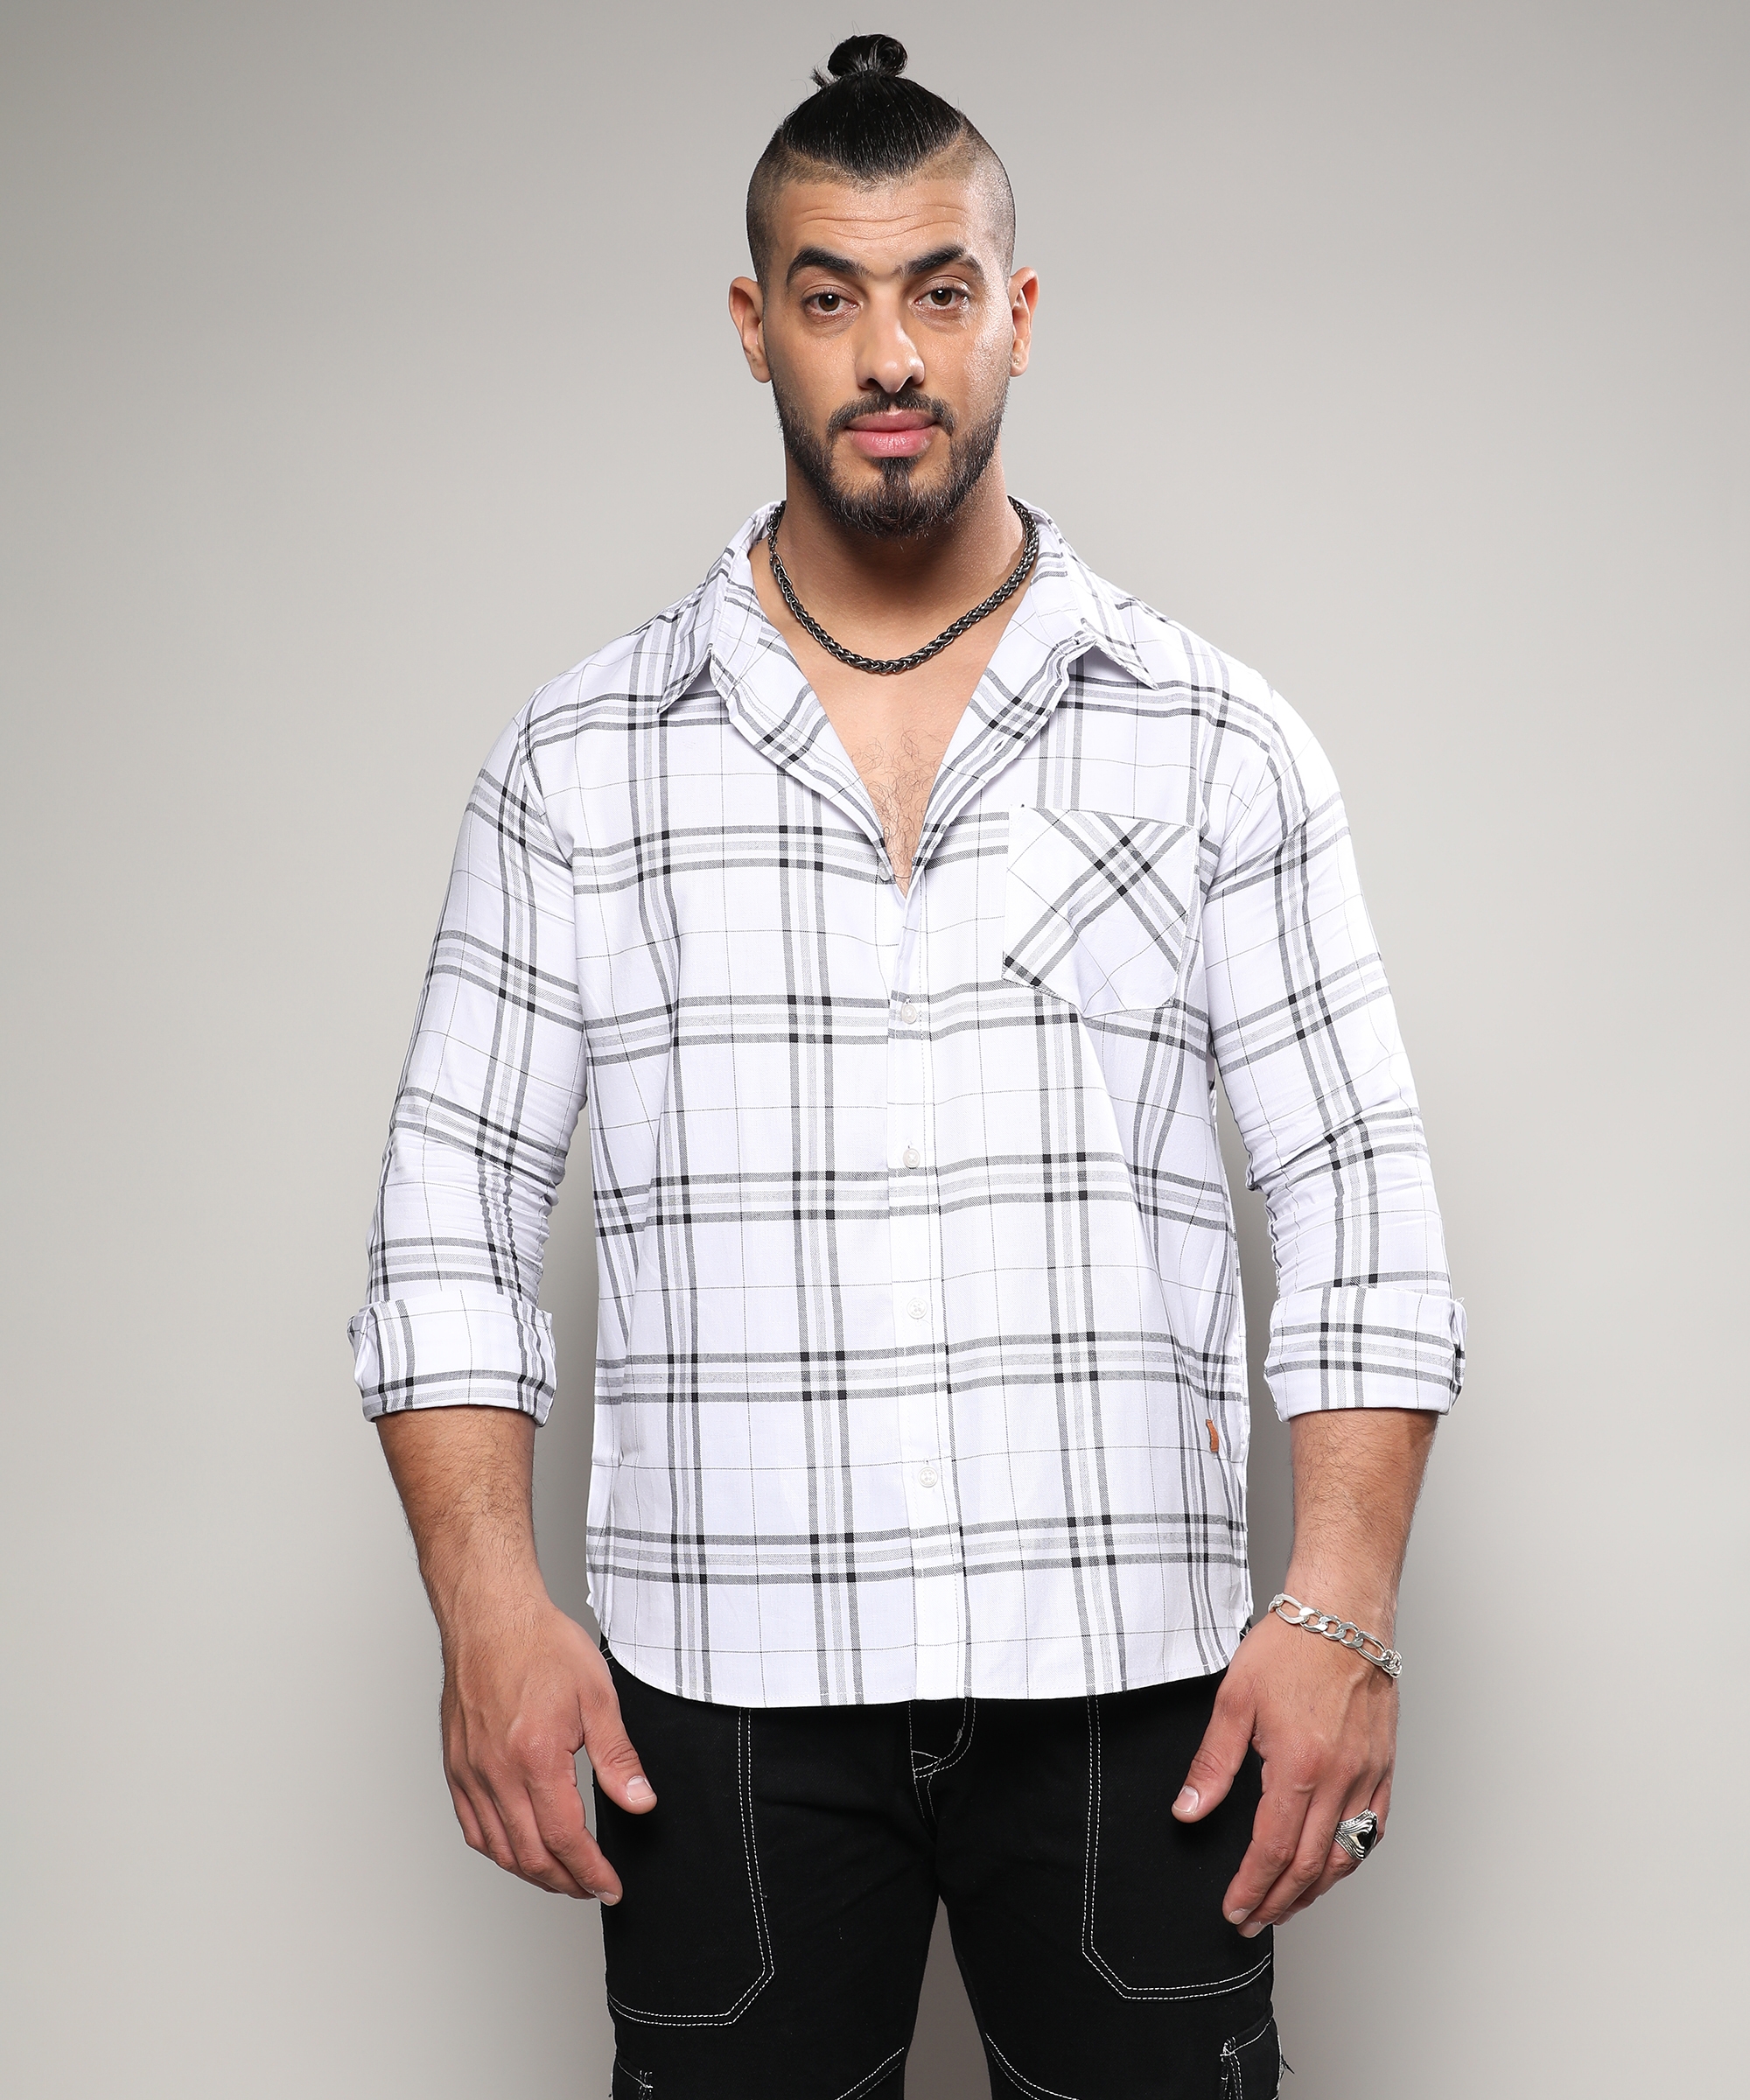 Instafab Plus | Men's White & Black Tartan Plaid Shirt